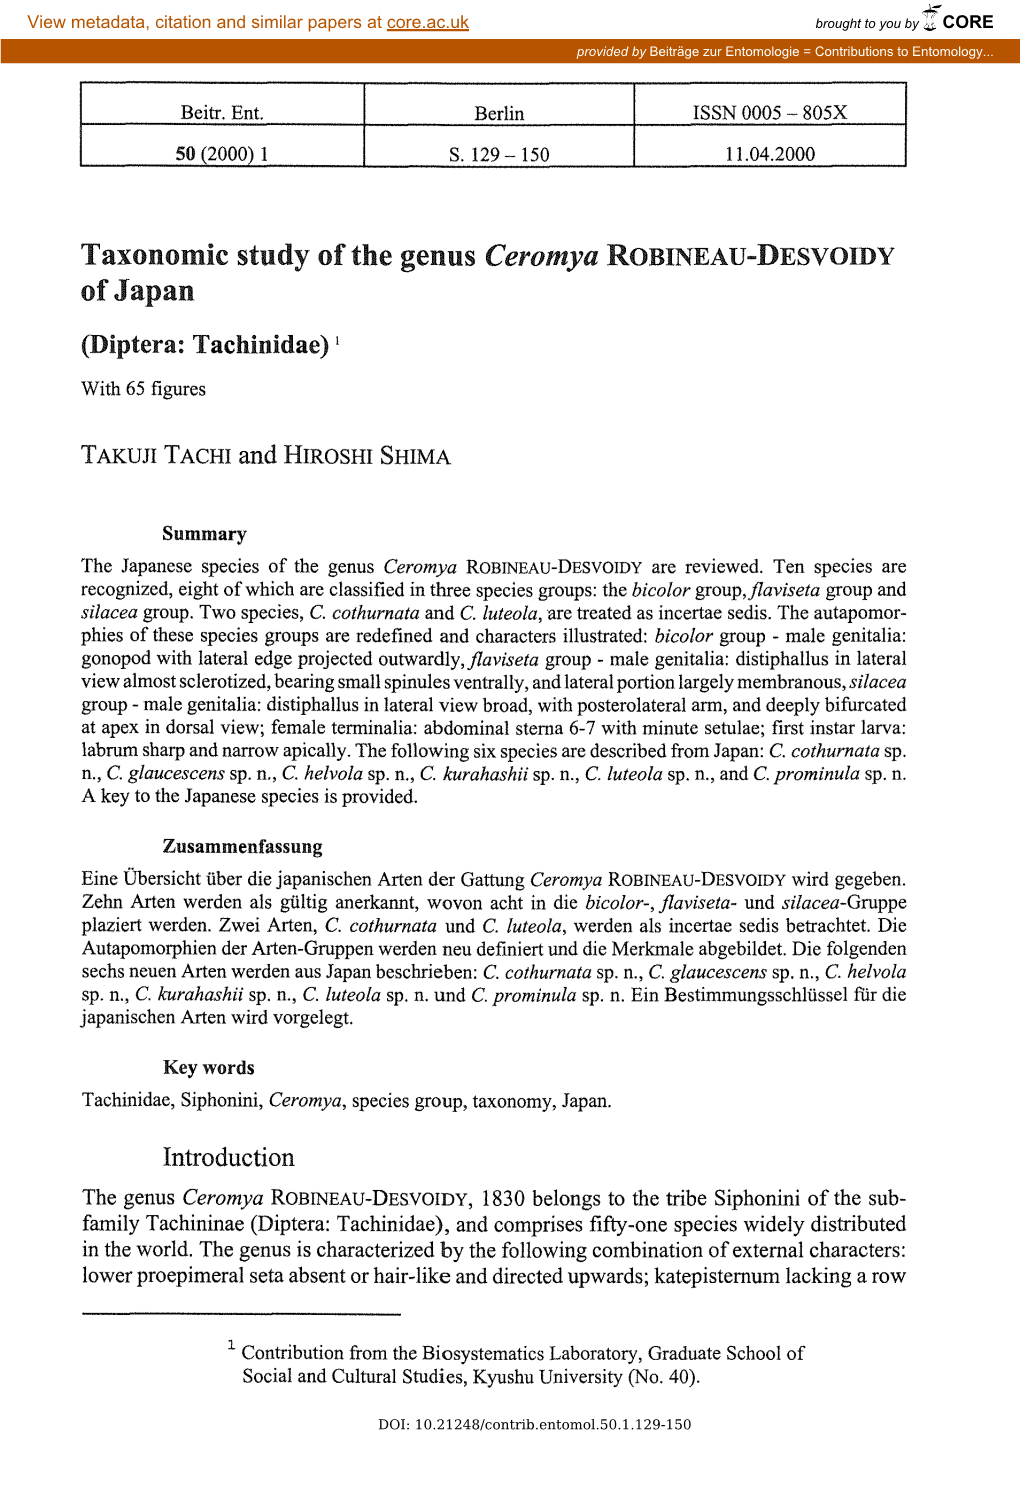 Taxonomic Study of the Genus Ceromya Robineau-Desvoidy Ofjapan